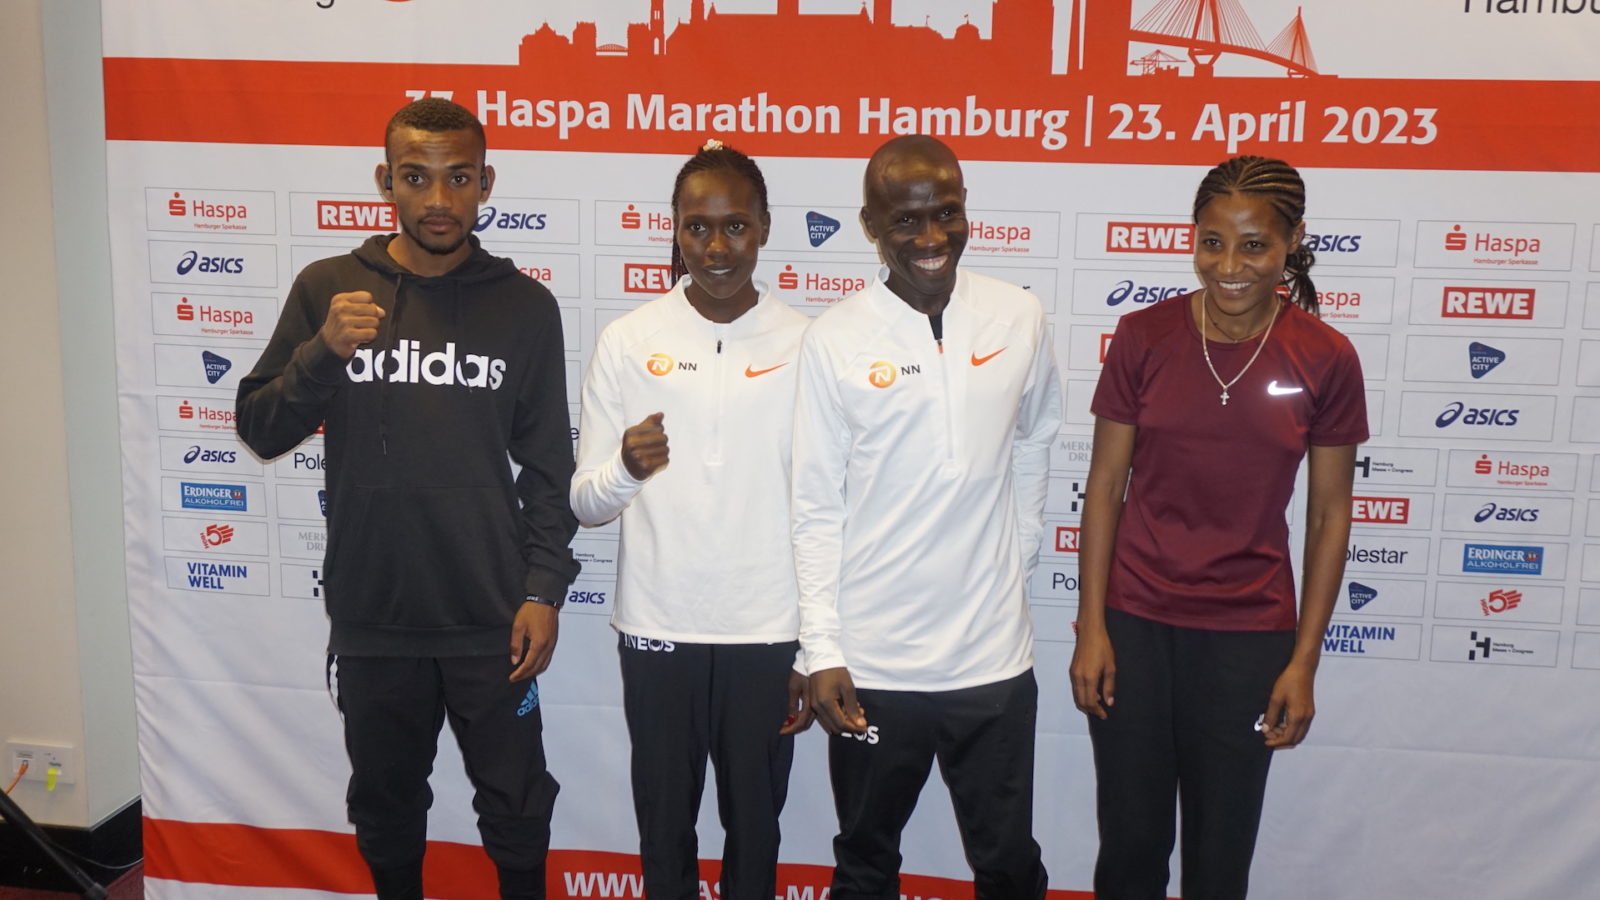 Tiruye Mesfin targets Hamburg course record, Daniel do Nascimento intends to bounce back